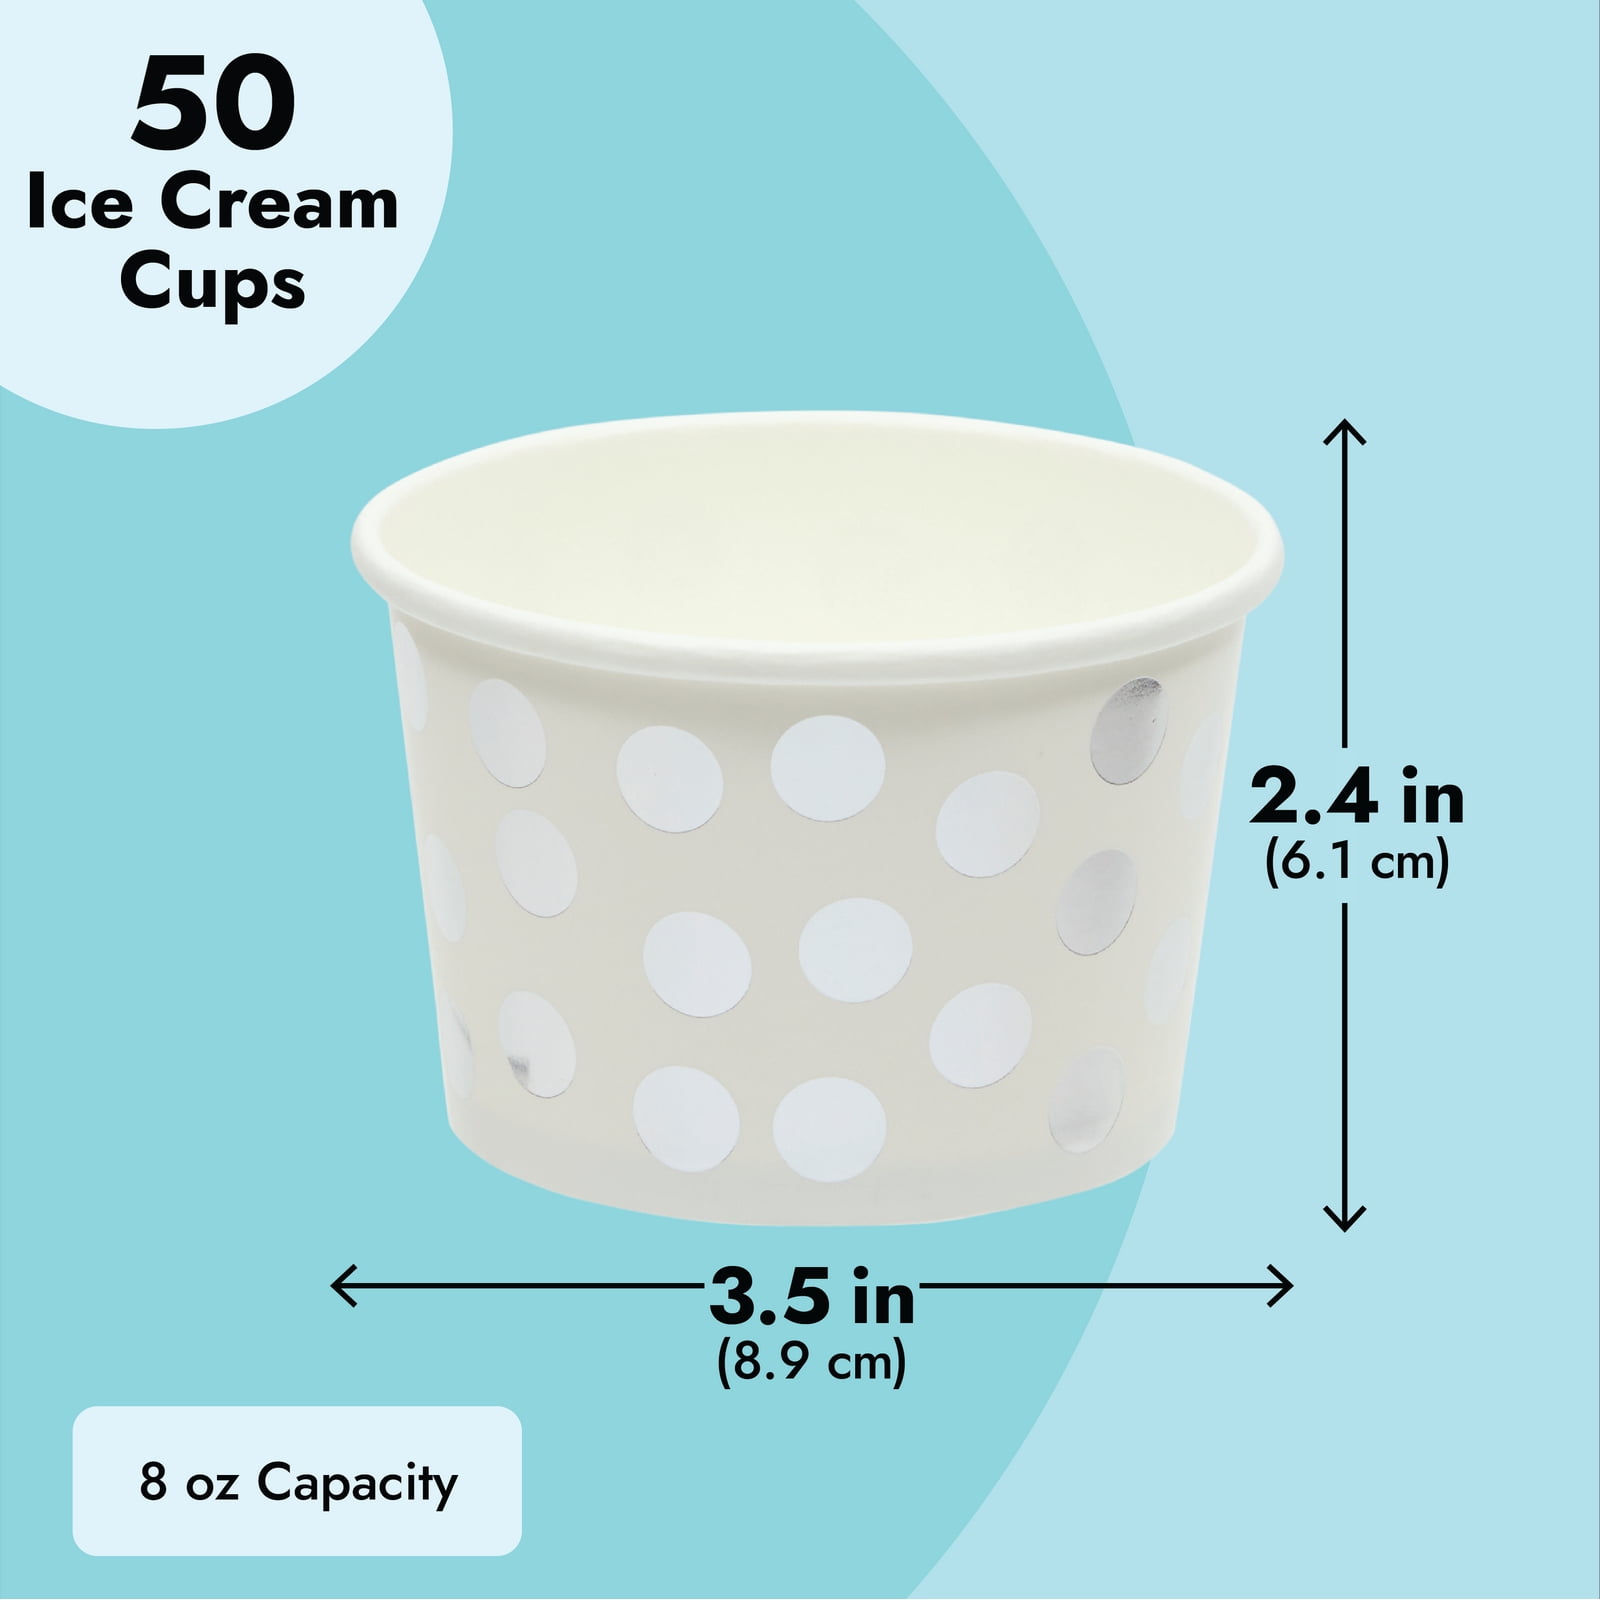 Corrugated Paper Cup With Lid 8 Oz 50 Pieces (Beige) - متجر مثالية النظافة